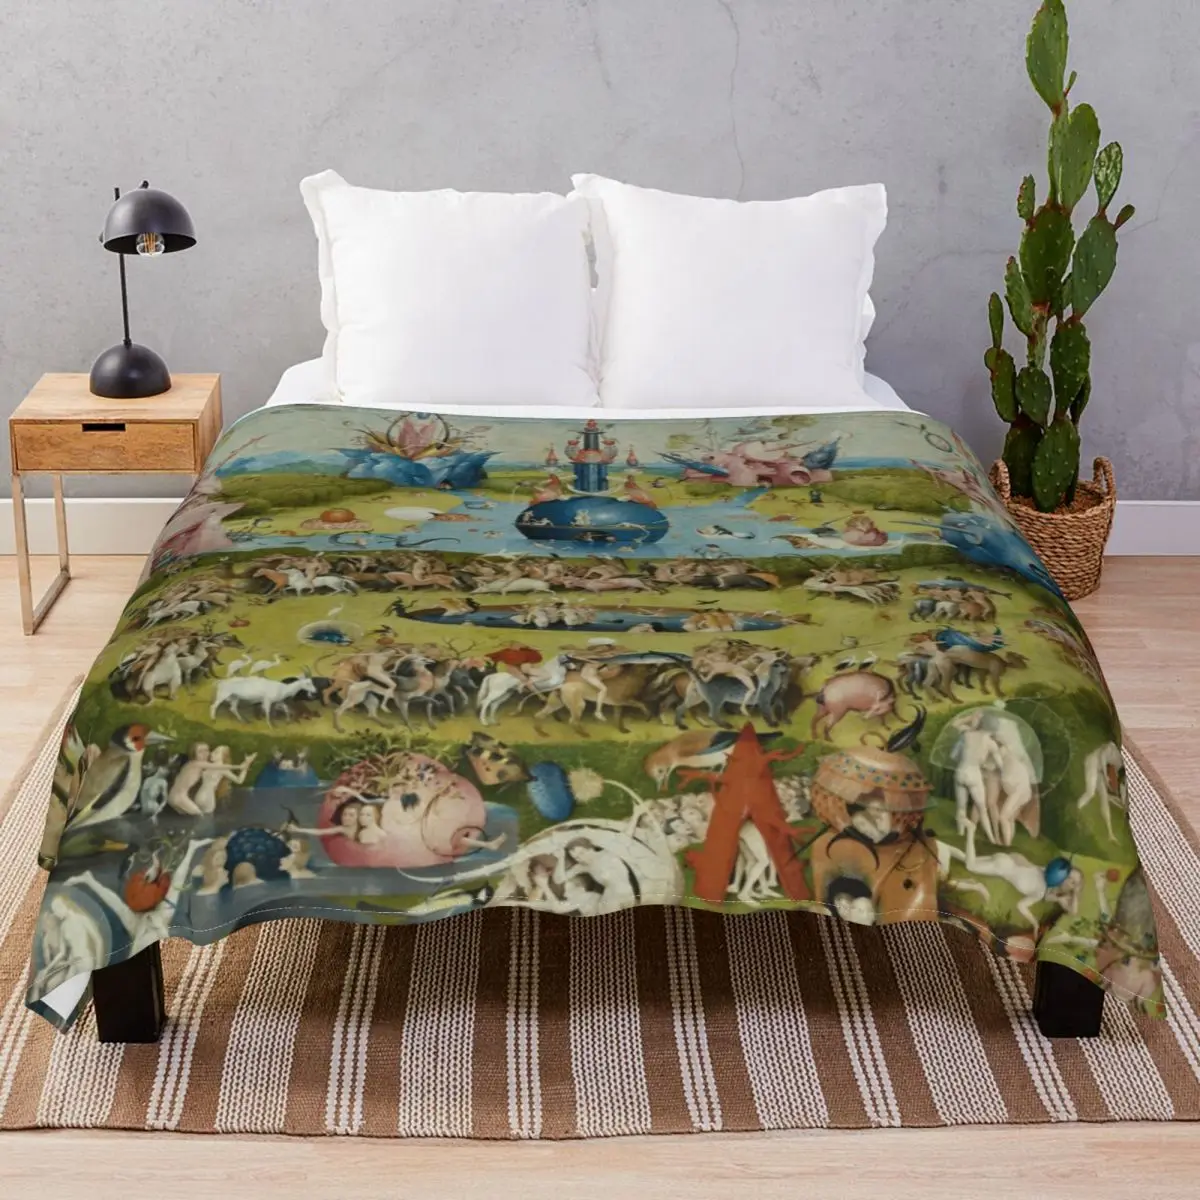 The Garden Of Earthly Delights Blankets Flannel Plush Print Ultra-Soft Unisex Throw Blanket for Bedding Sofa Travel Cinema